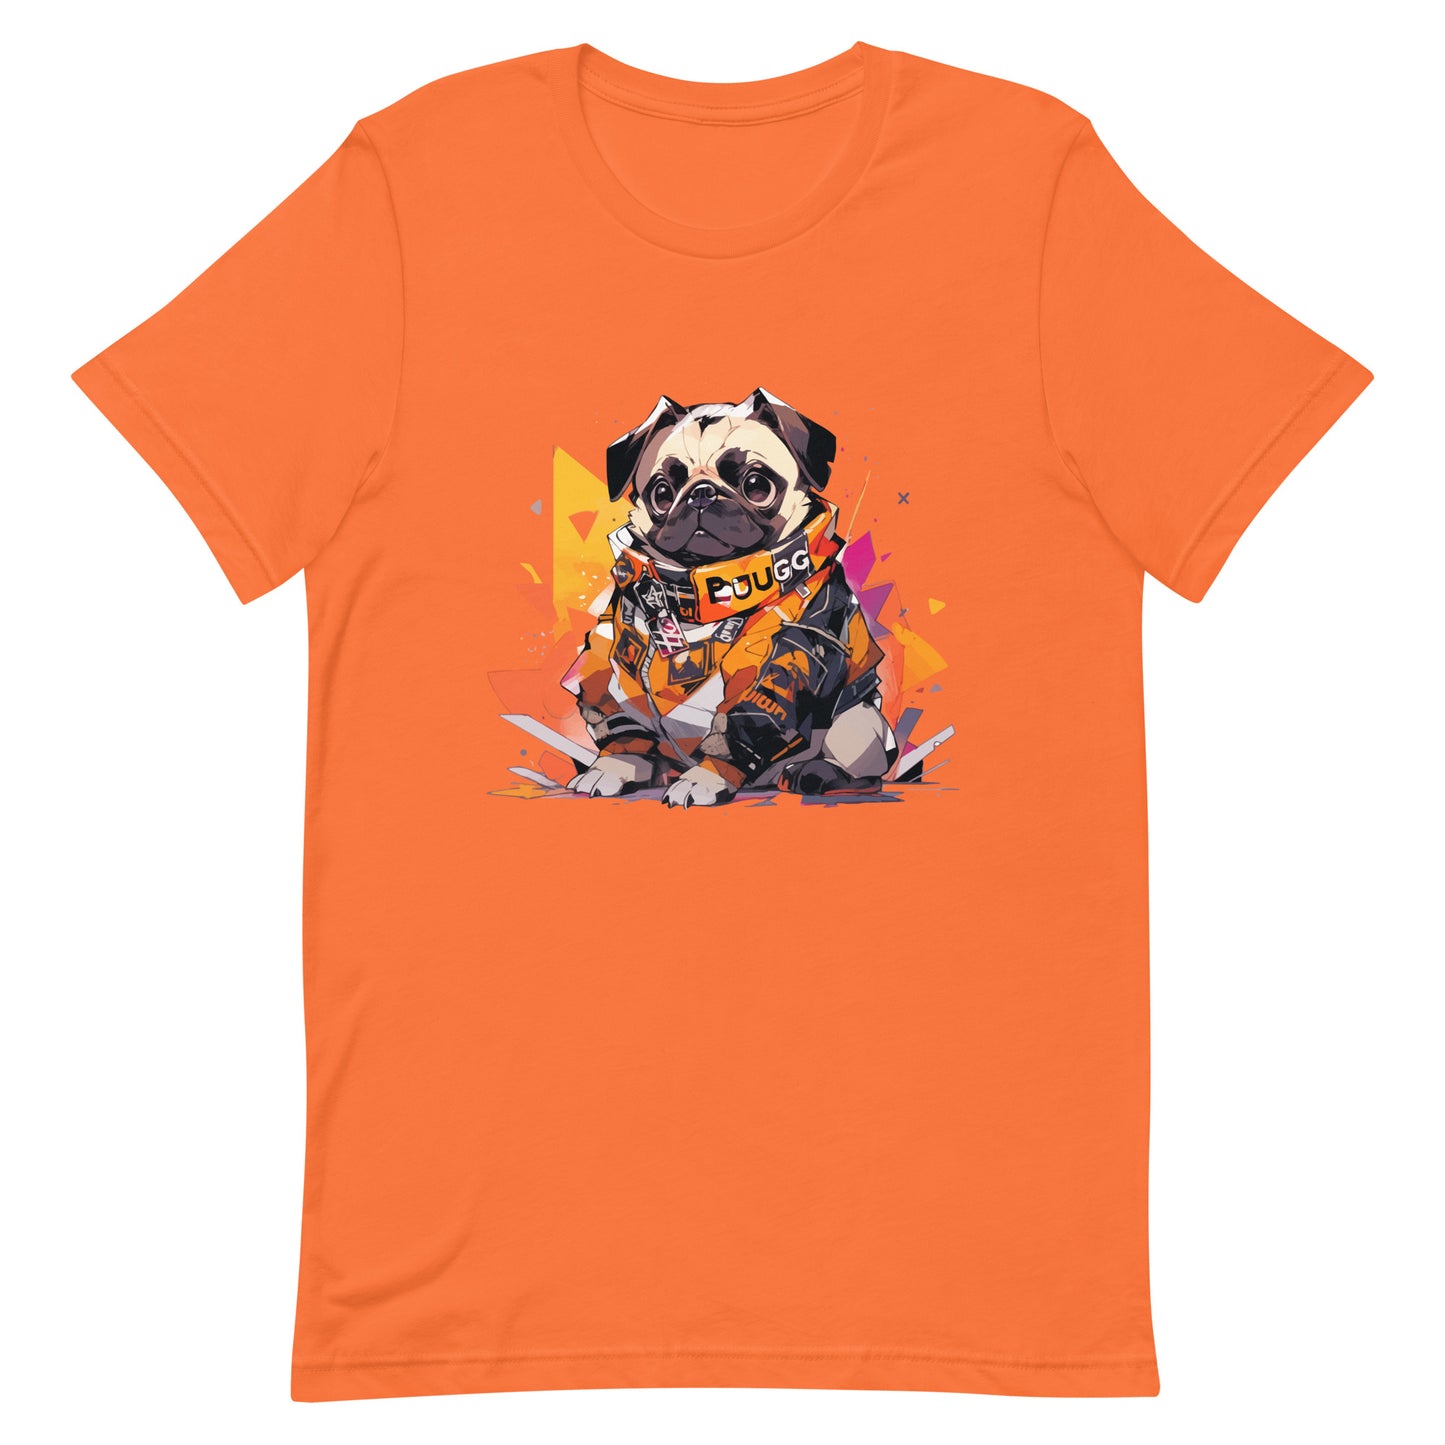 Dutch bulldog, Hip hop dog, Mini mastiff, Chinese pug stylish, Most funny doggy in district, Pug rapper - Unisex t-shirt